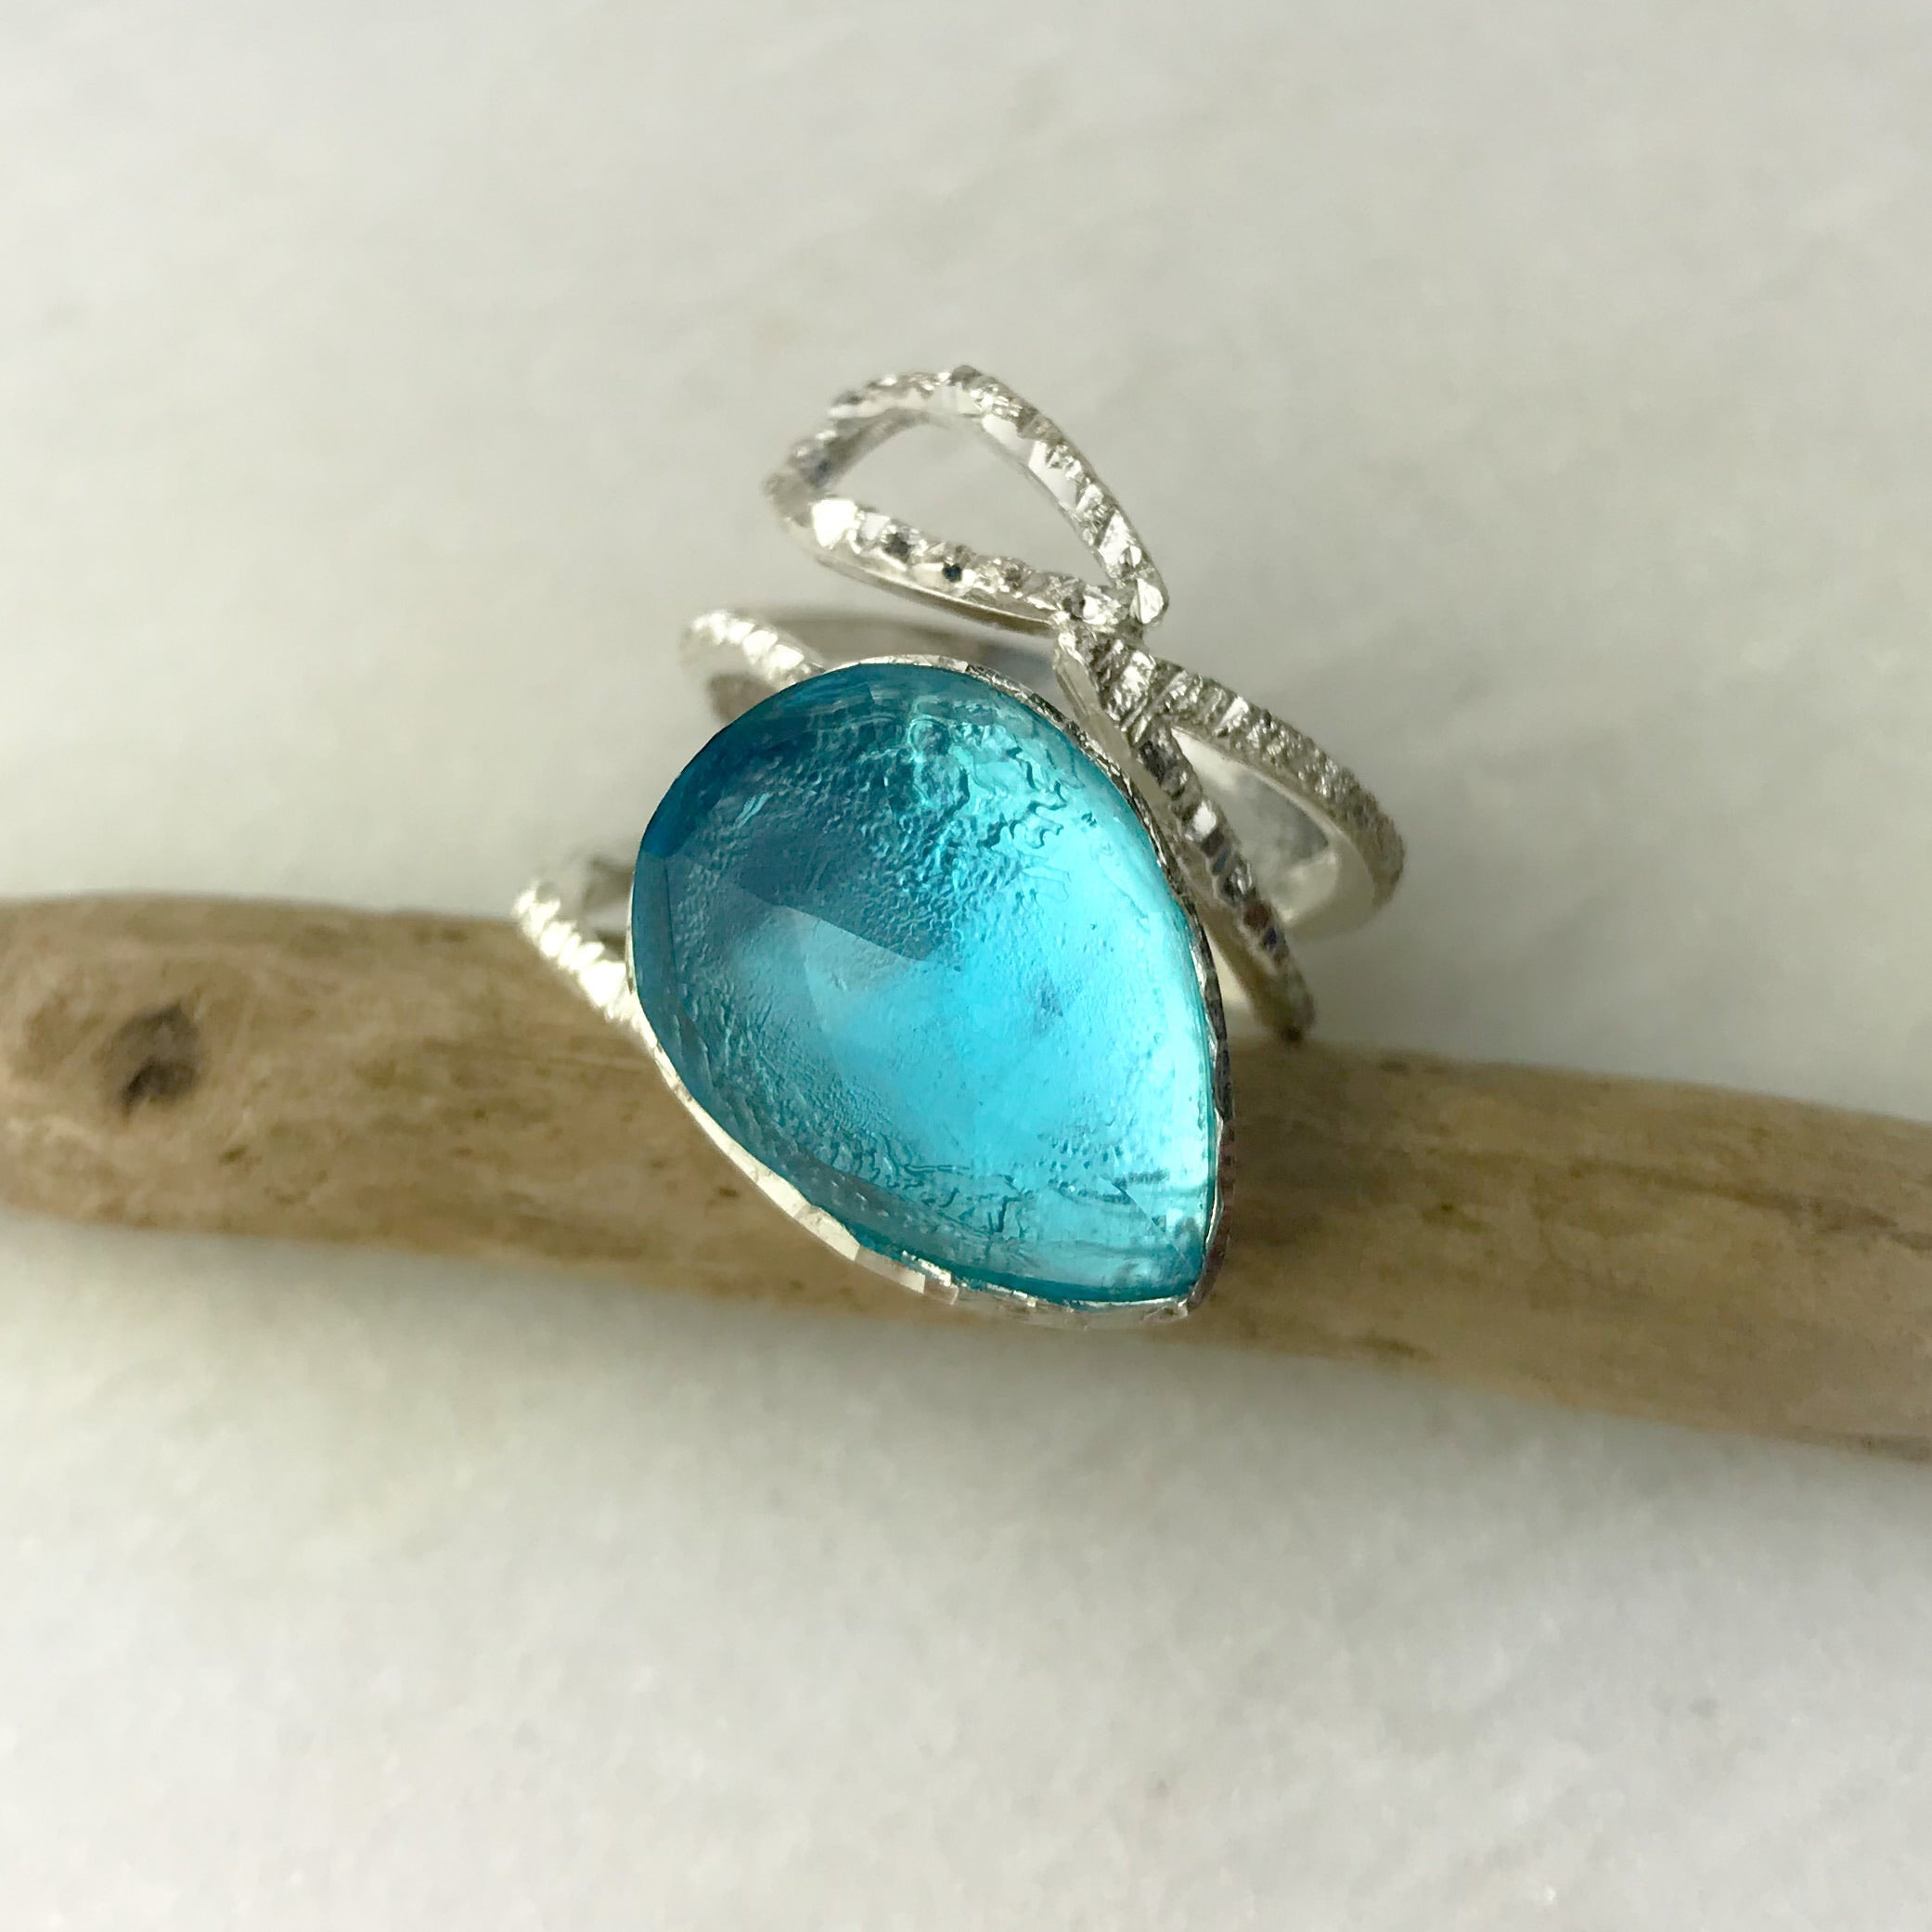 Blue Chalcedony Teardrop Ring - The Nancy Smillie Shop - Art, Jewellery & Designer Gifts Glasgow